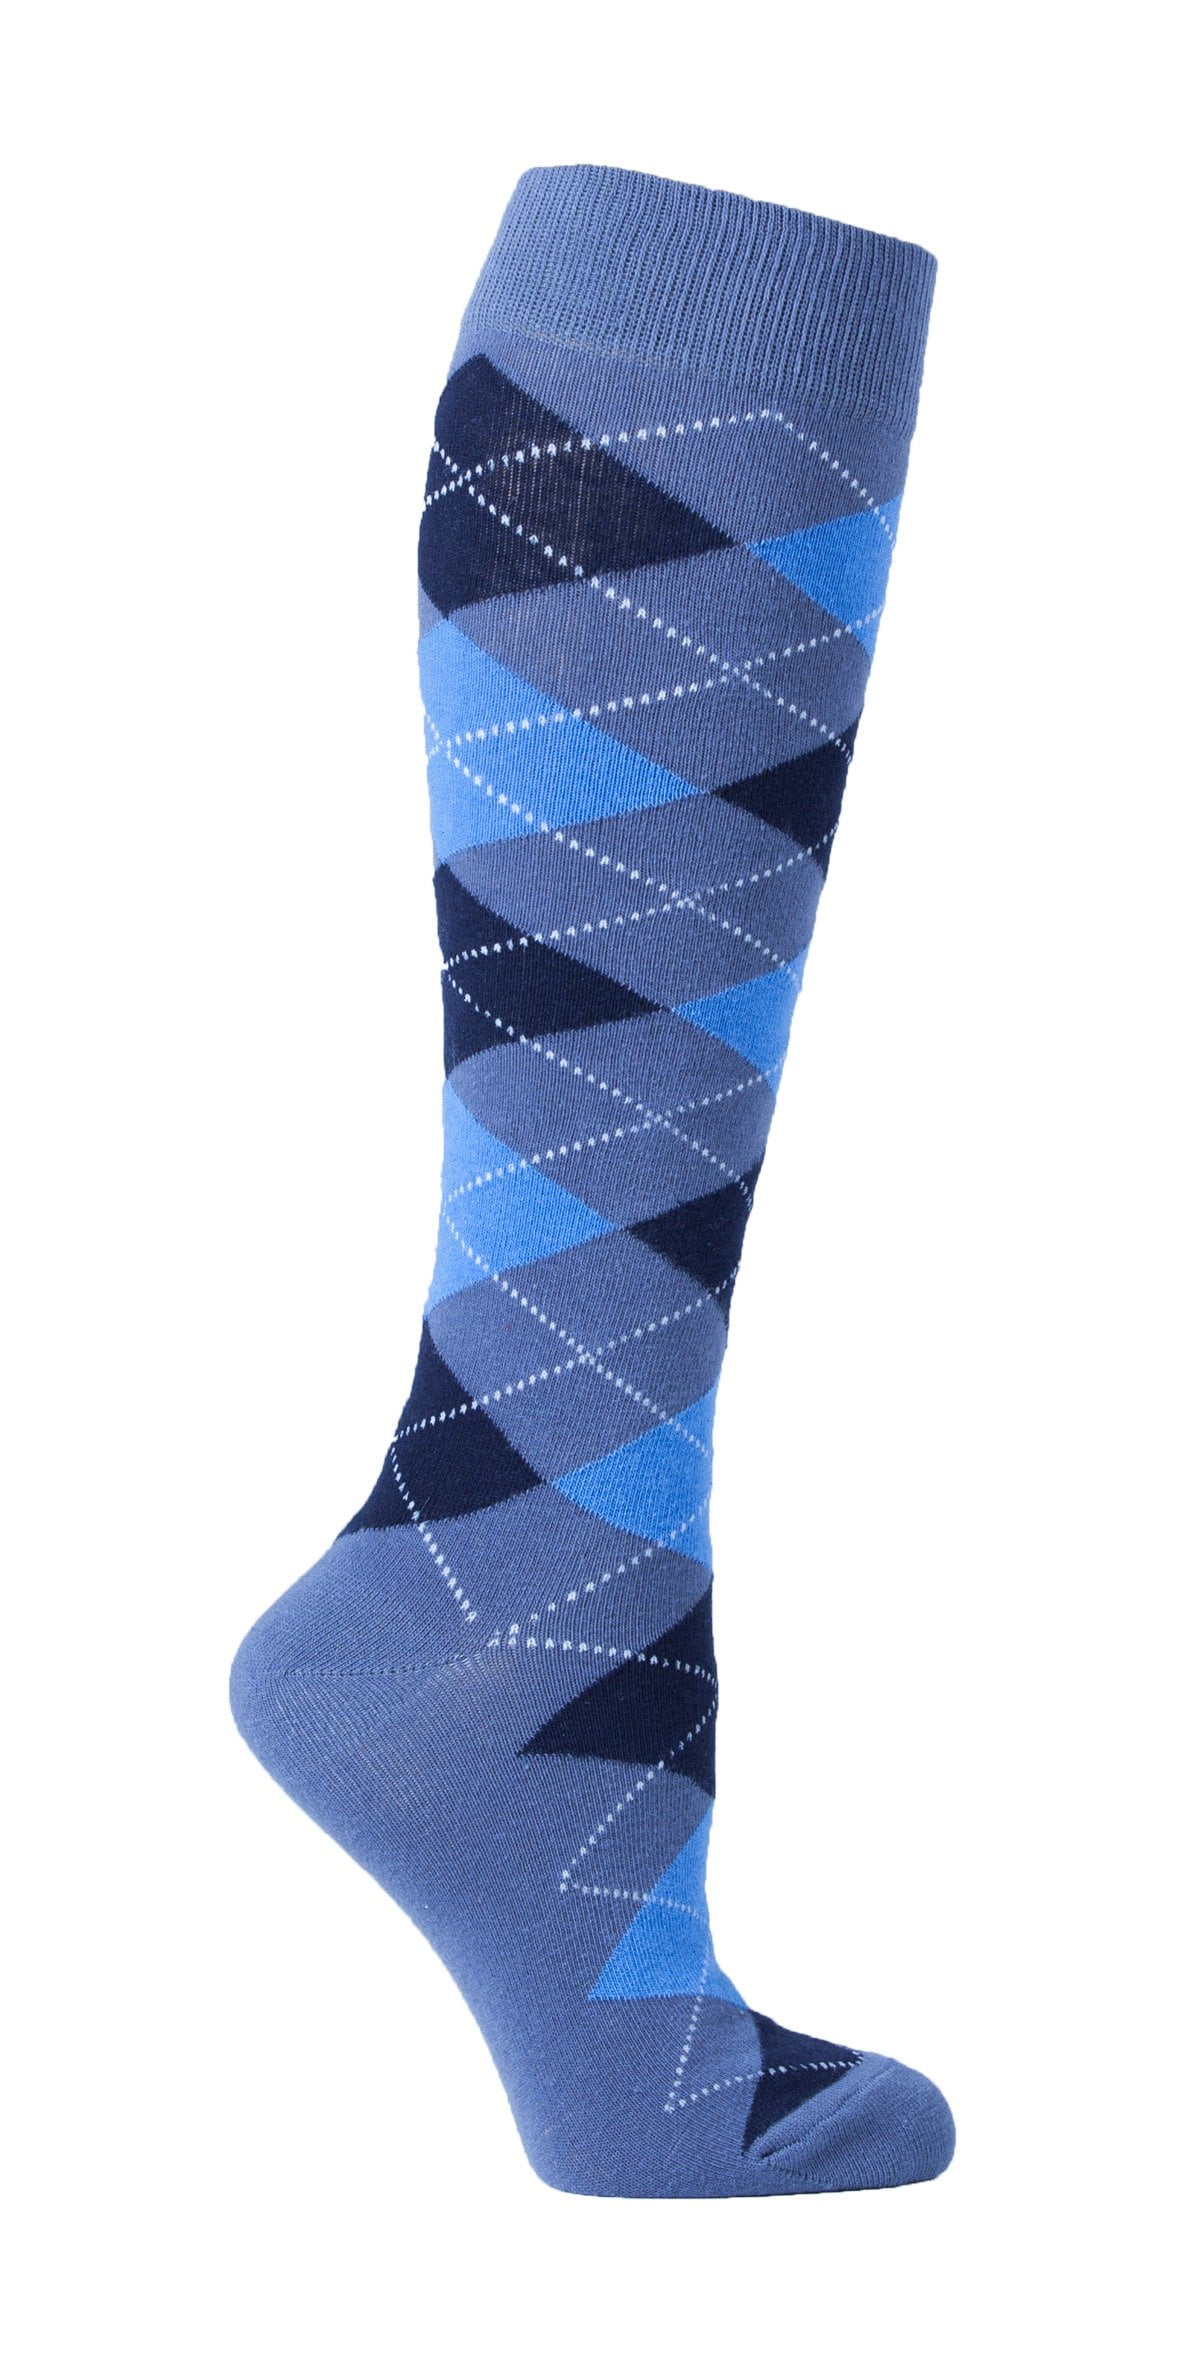 Palace Blue Argyle Socks - Walmart.com